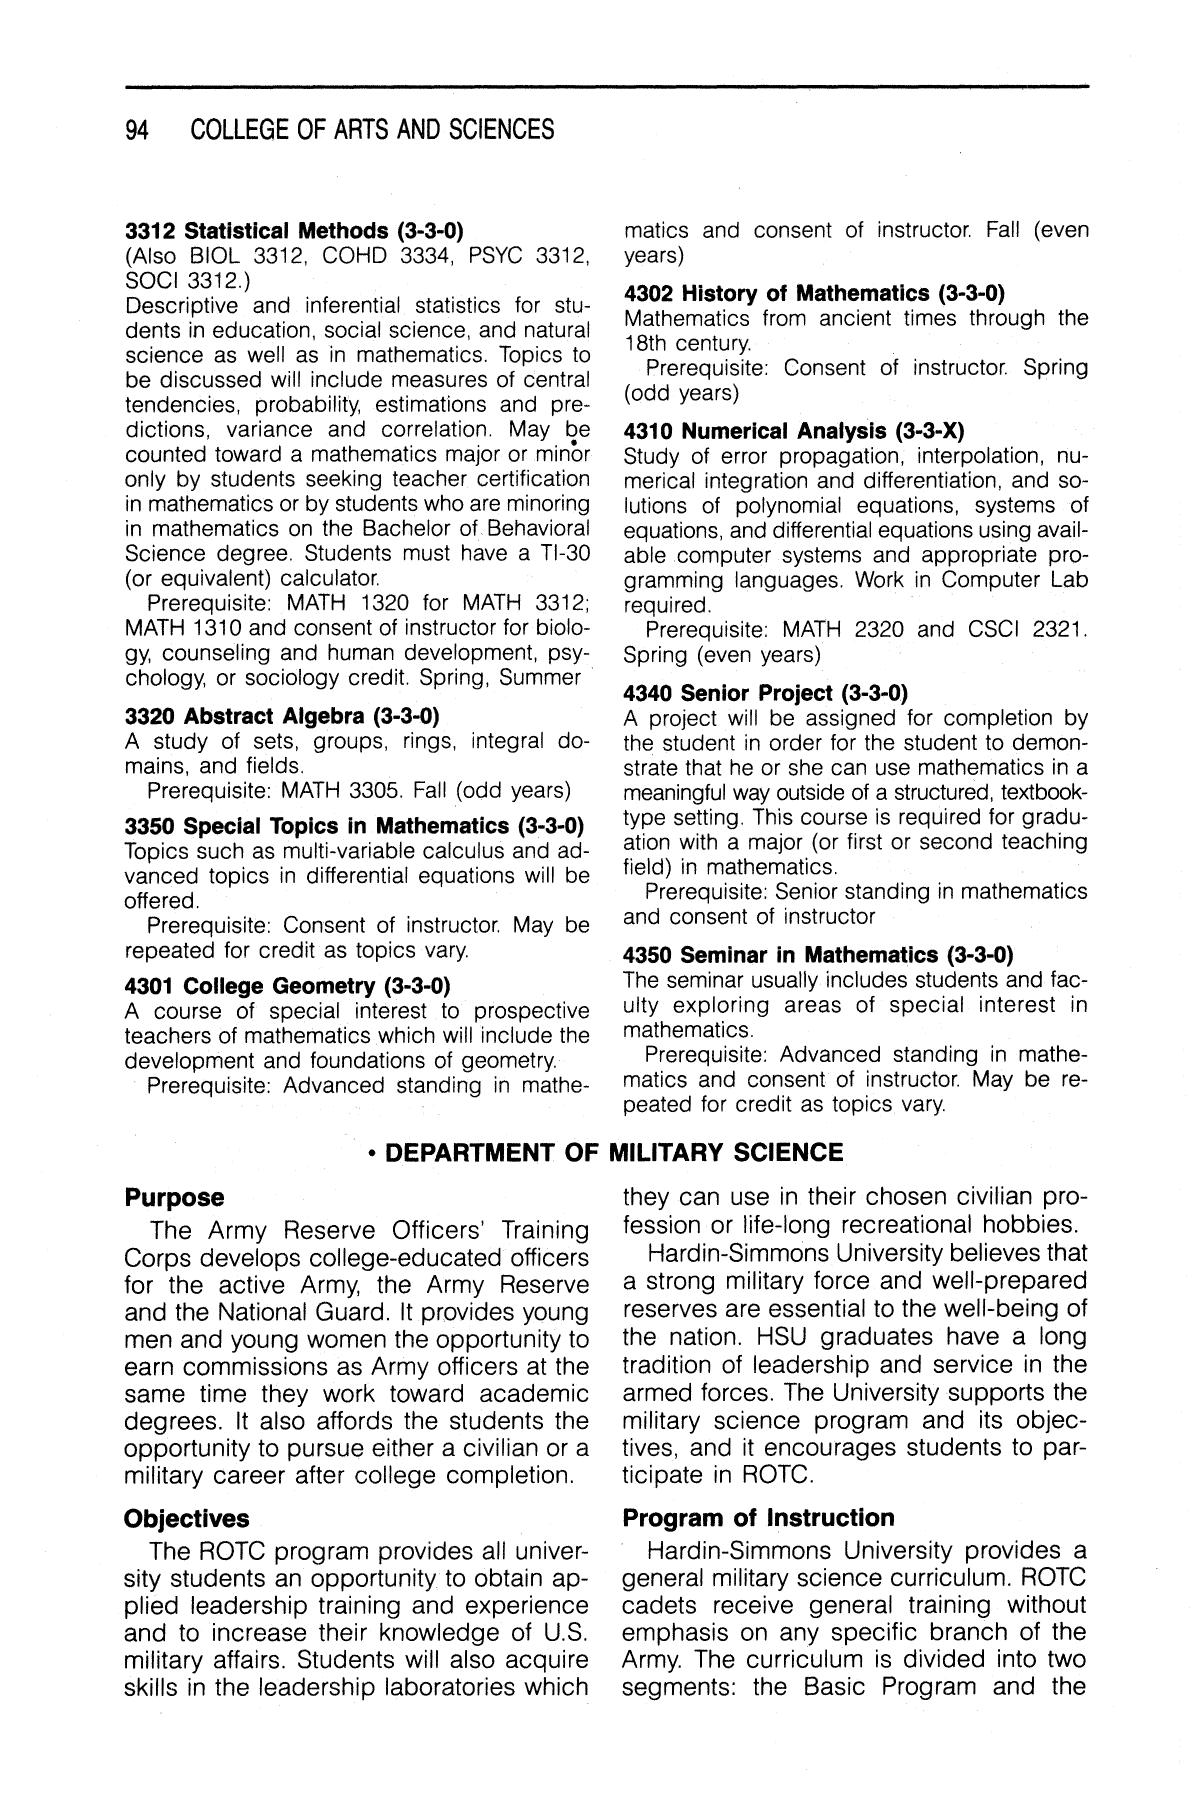 Catalog of Hardin-Simmons University, 1994-1995 Undergraduate Bulletin
                                                
                                                    94
                                                